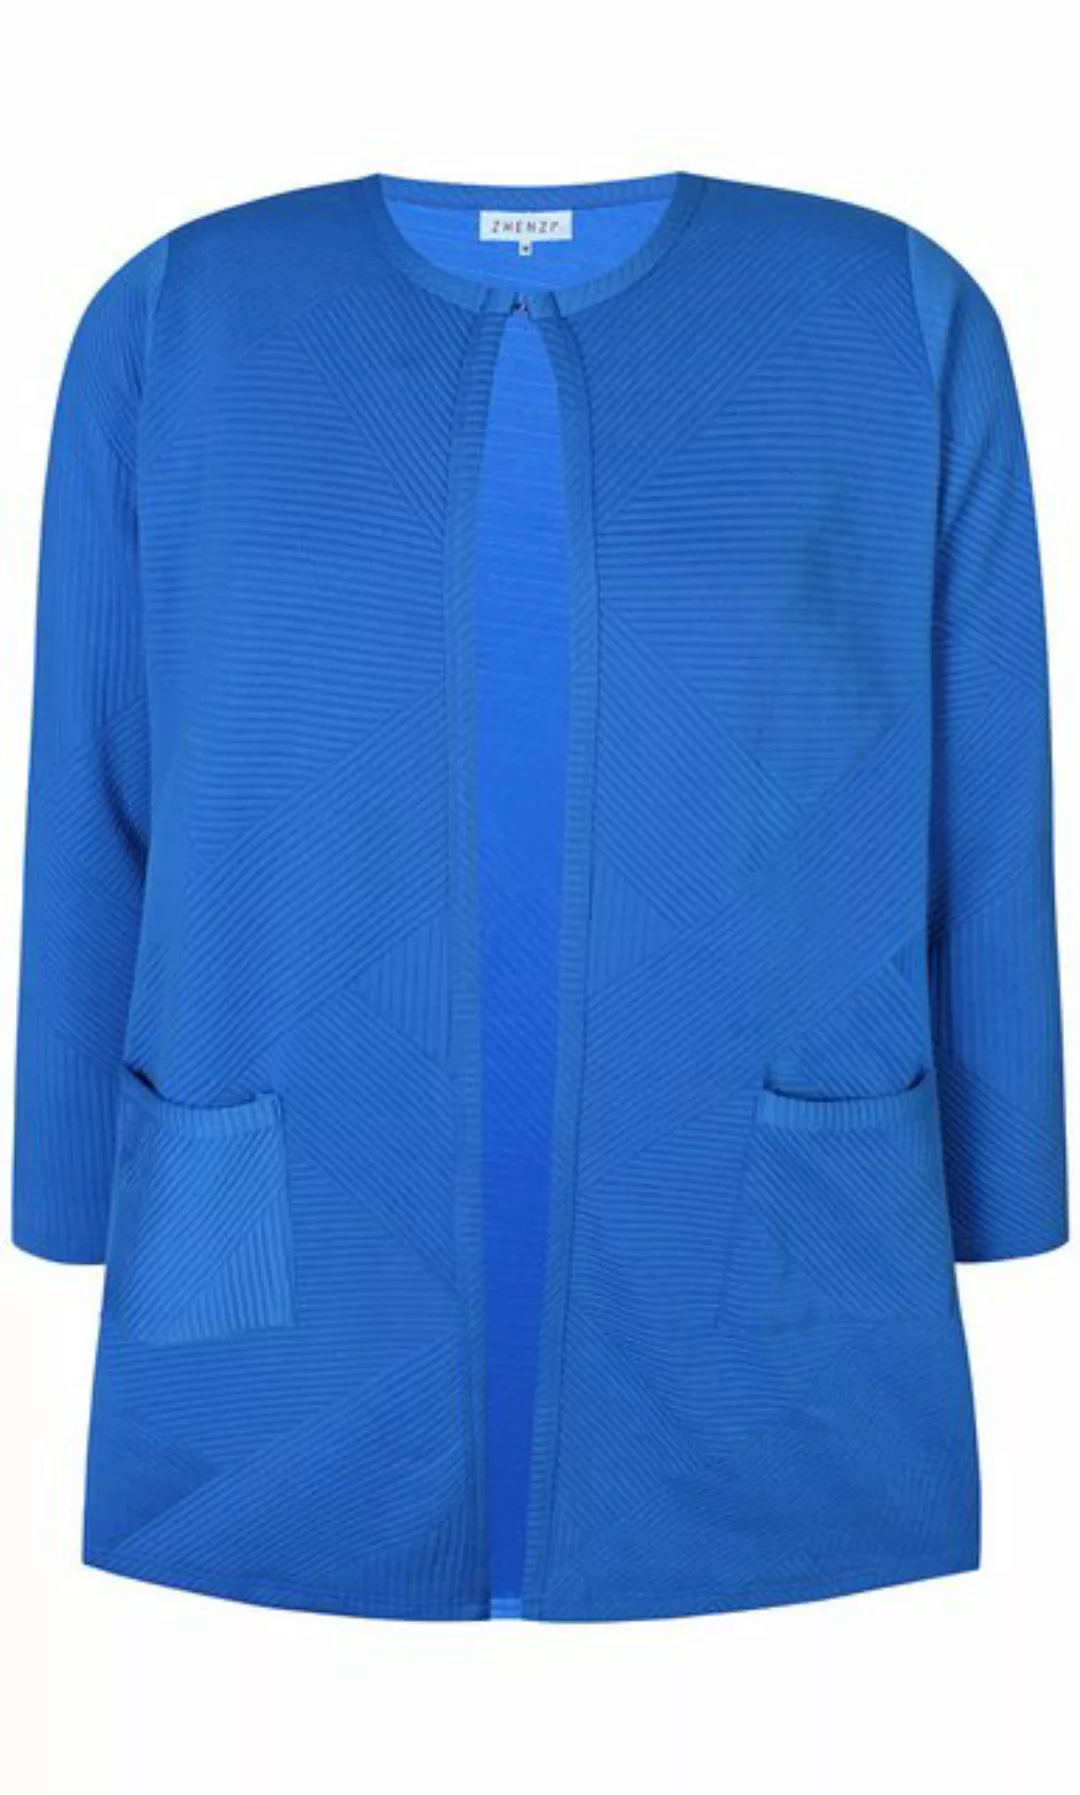 Zhenzi Sweatjacke Shirtjacke royal blau günstig online kaufen